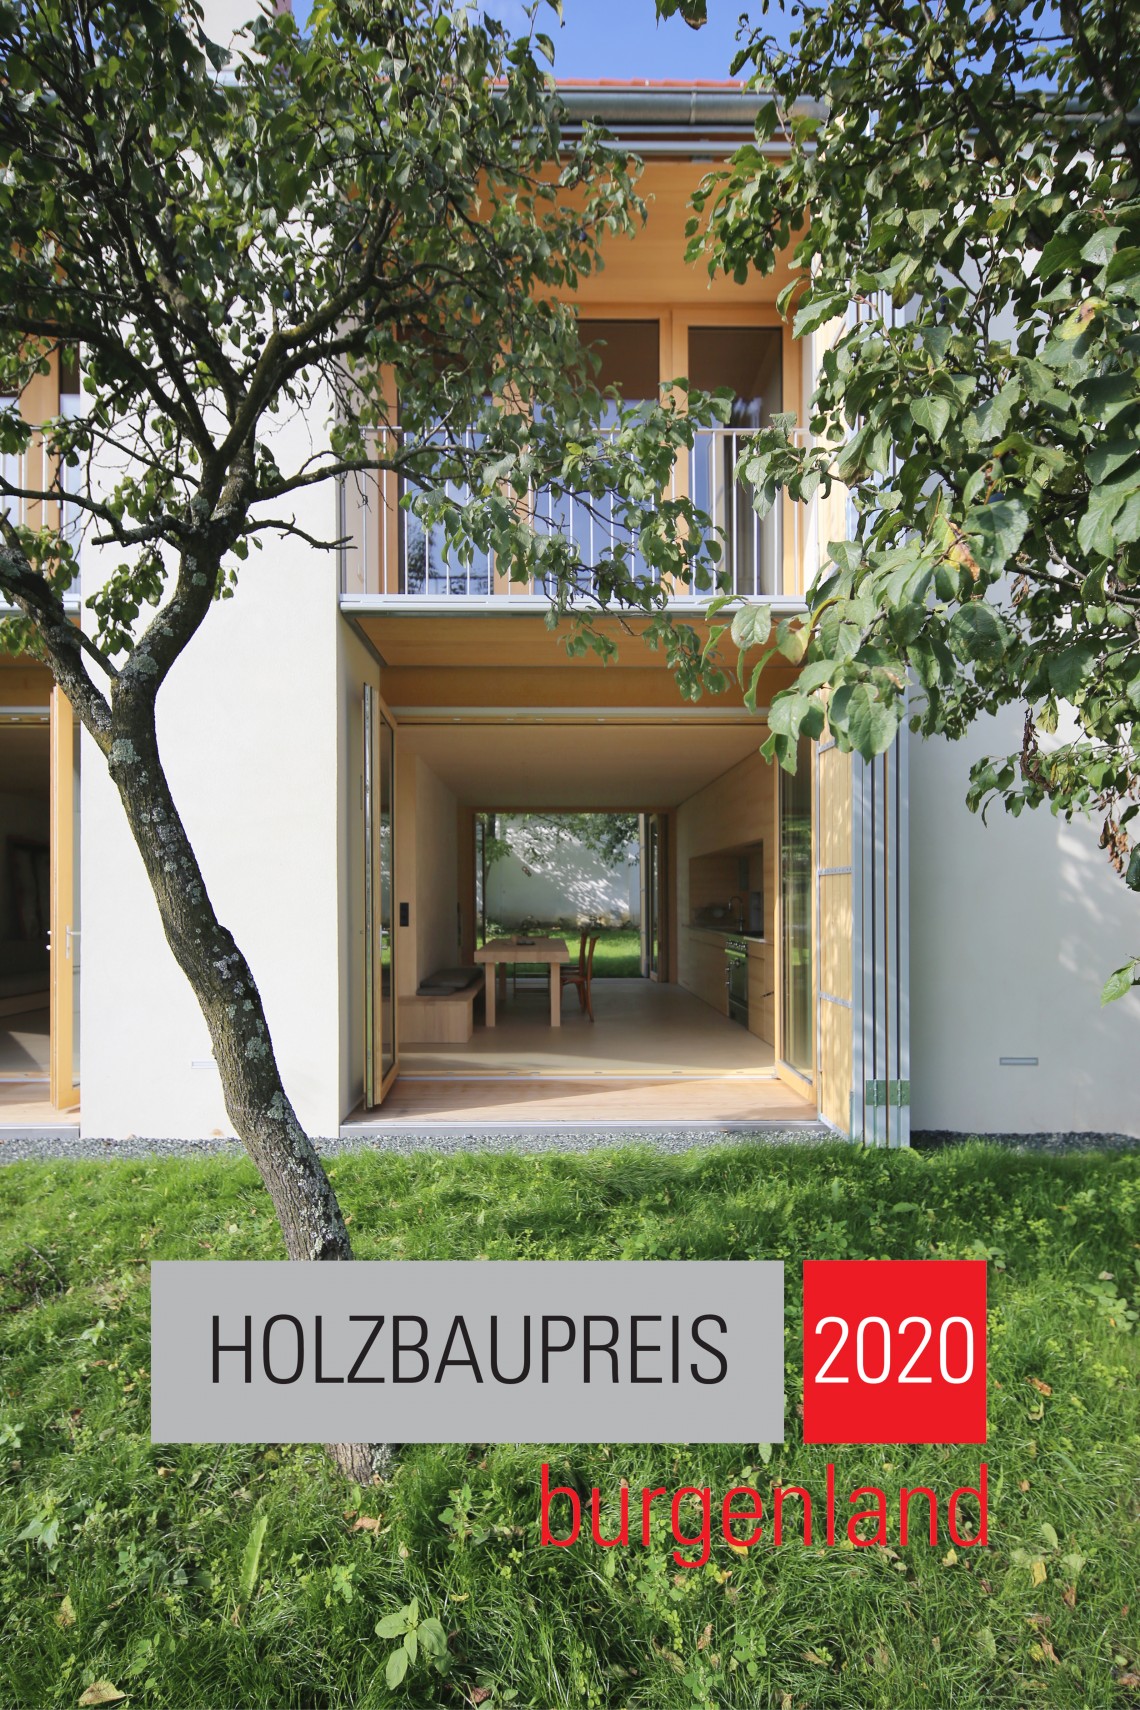 TROY&#x20;Holzbaupreis&#x20;Burgenland&#x20;Schnapsbrennerei